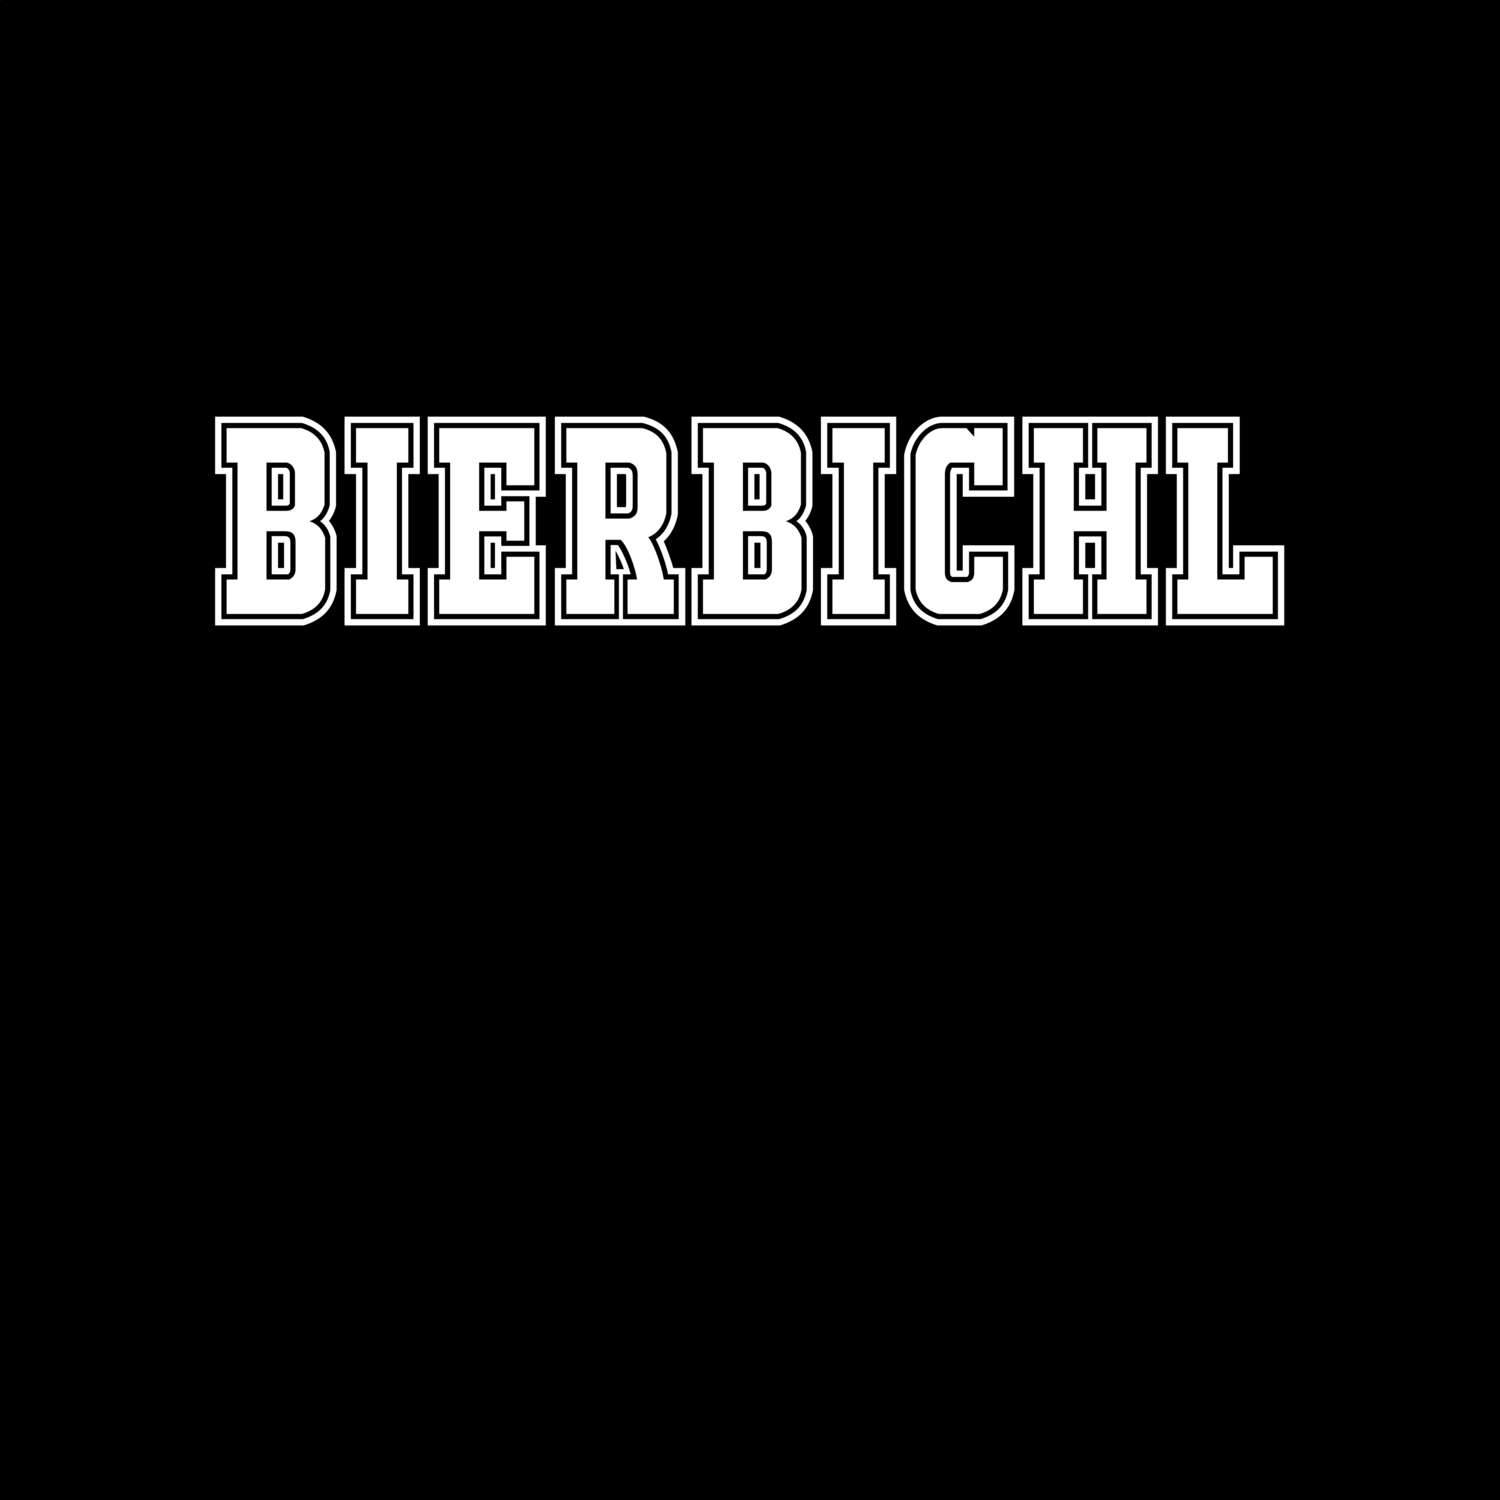 Bierbichl T-Shirt »Classic«